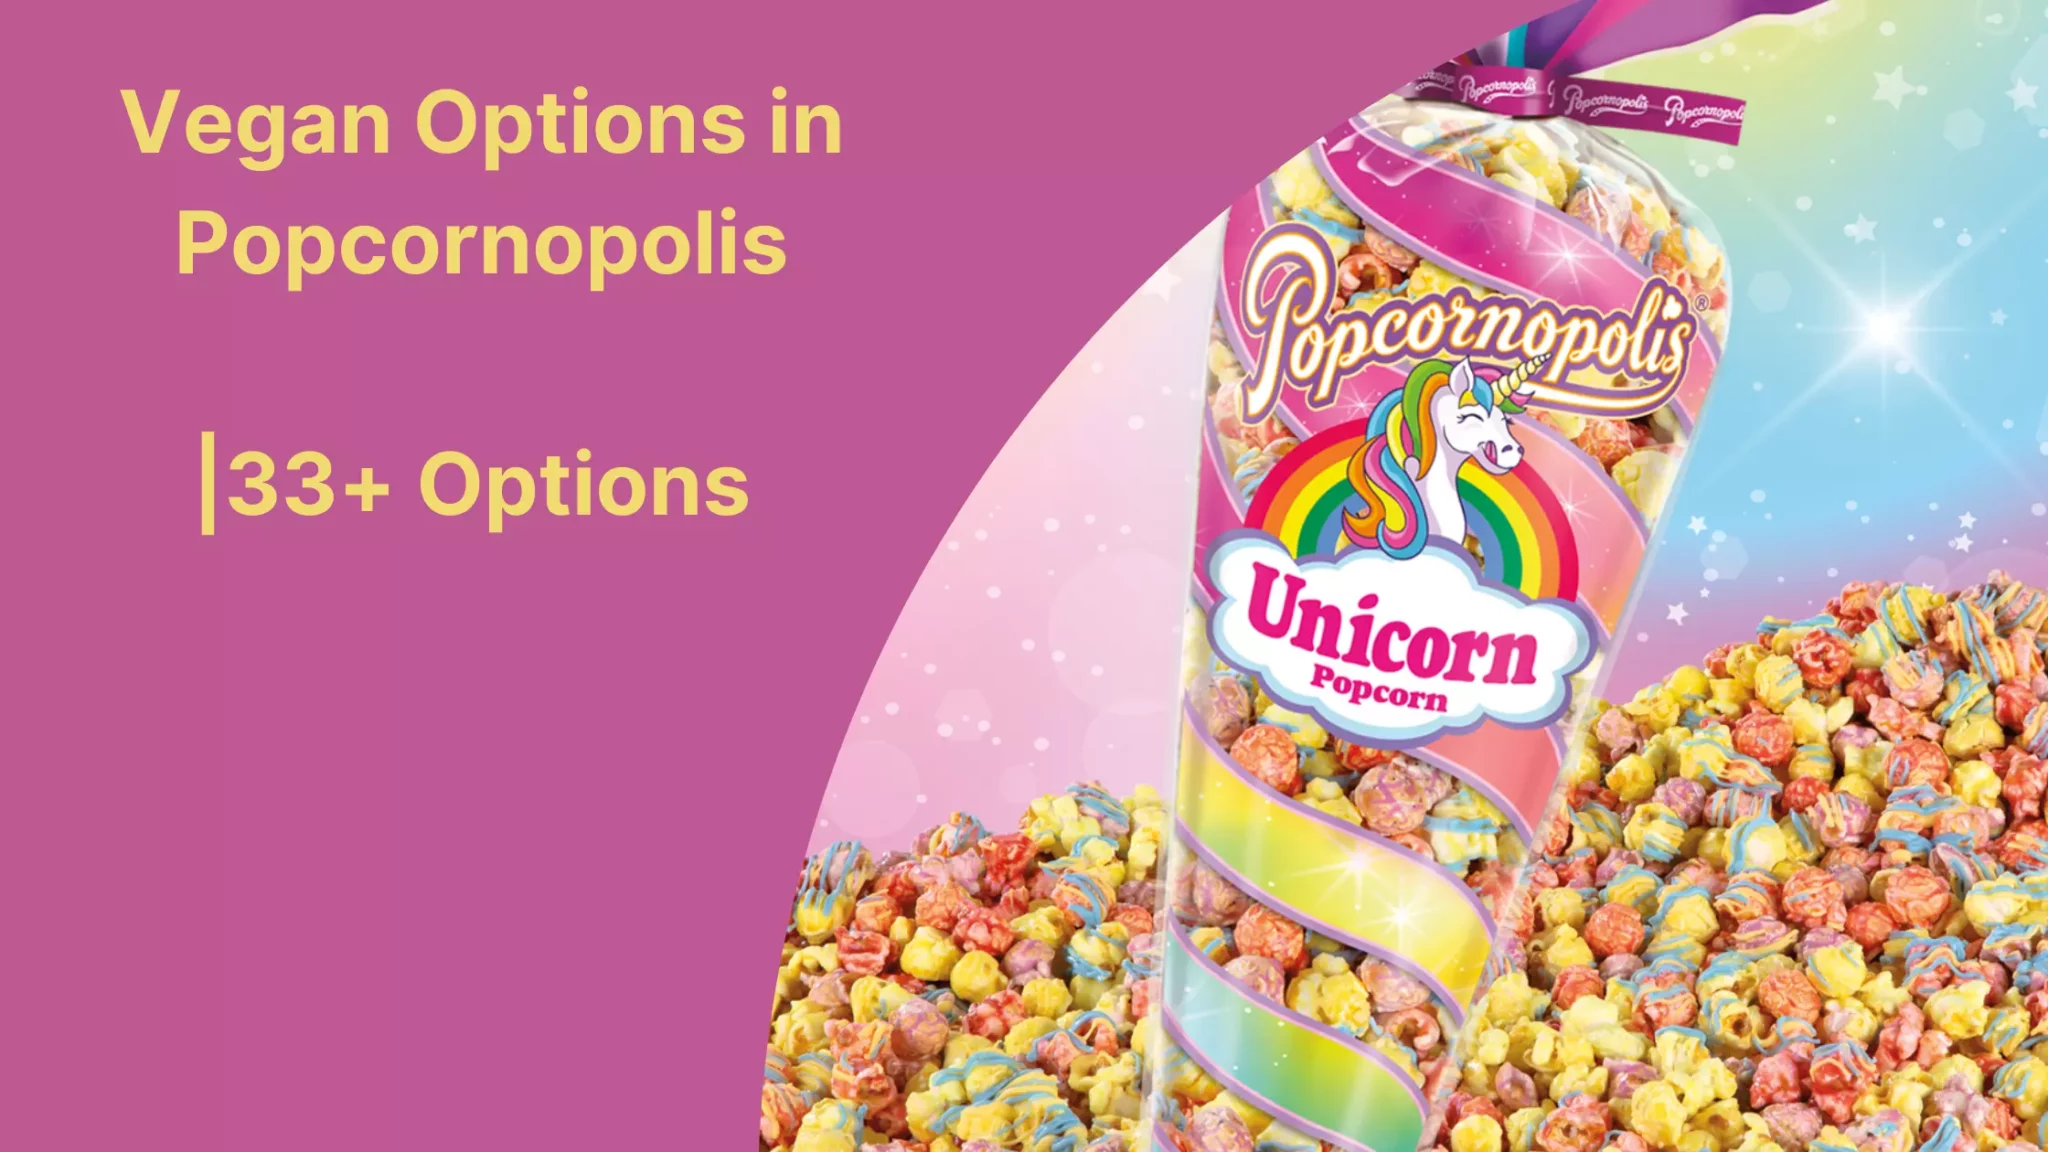 Vegan Options in Popcornopolis